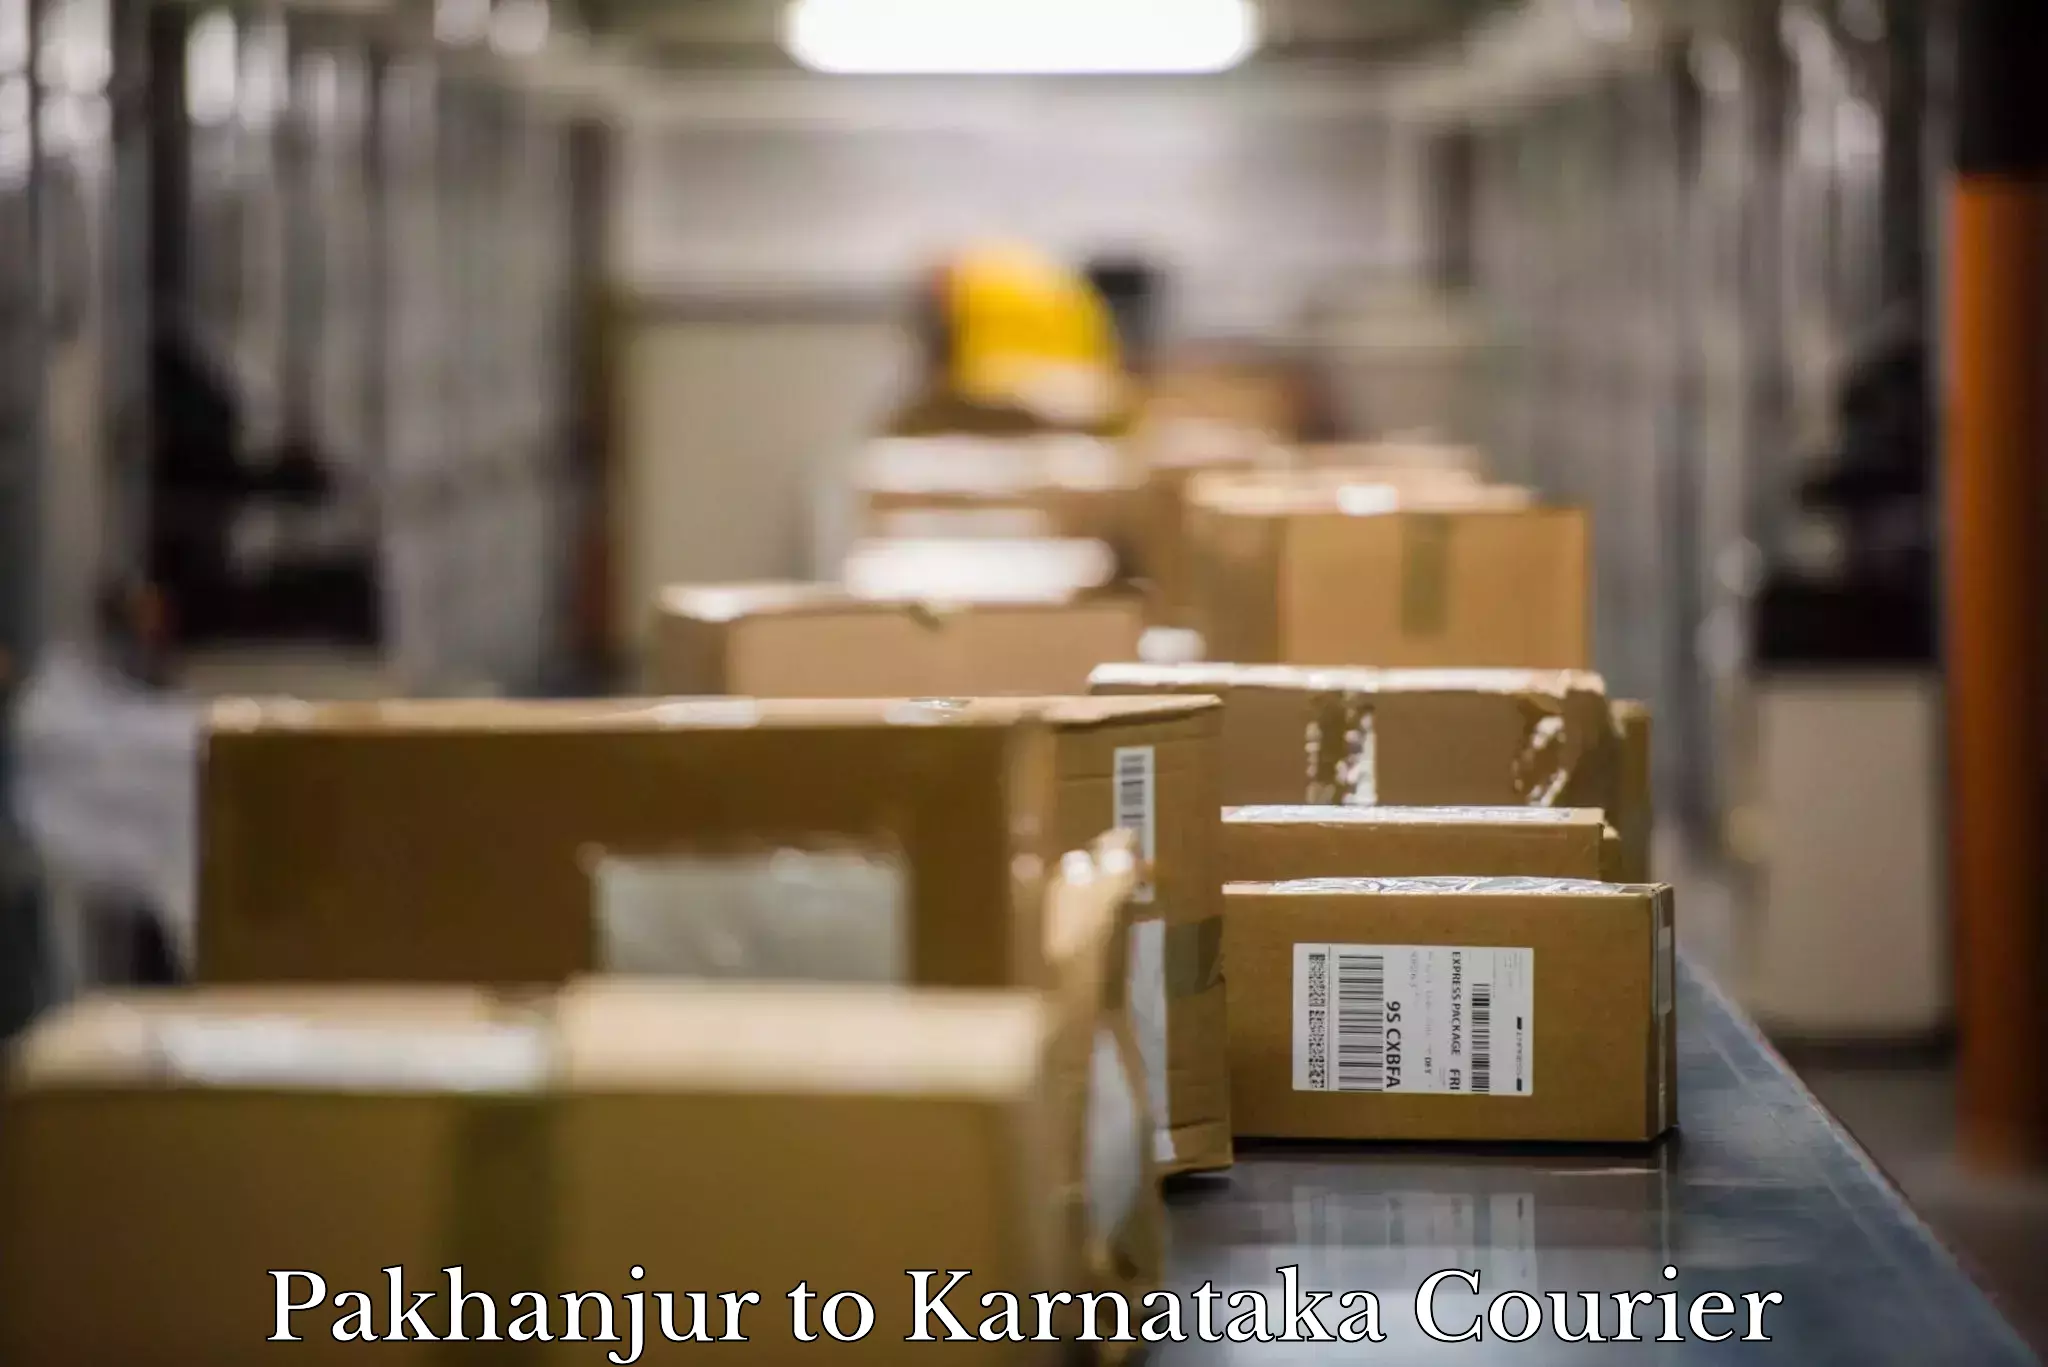 Professional moving company Pakhanjur to Banavara